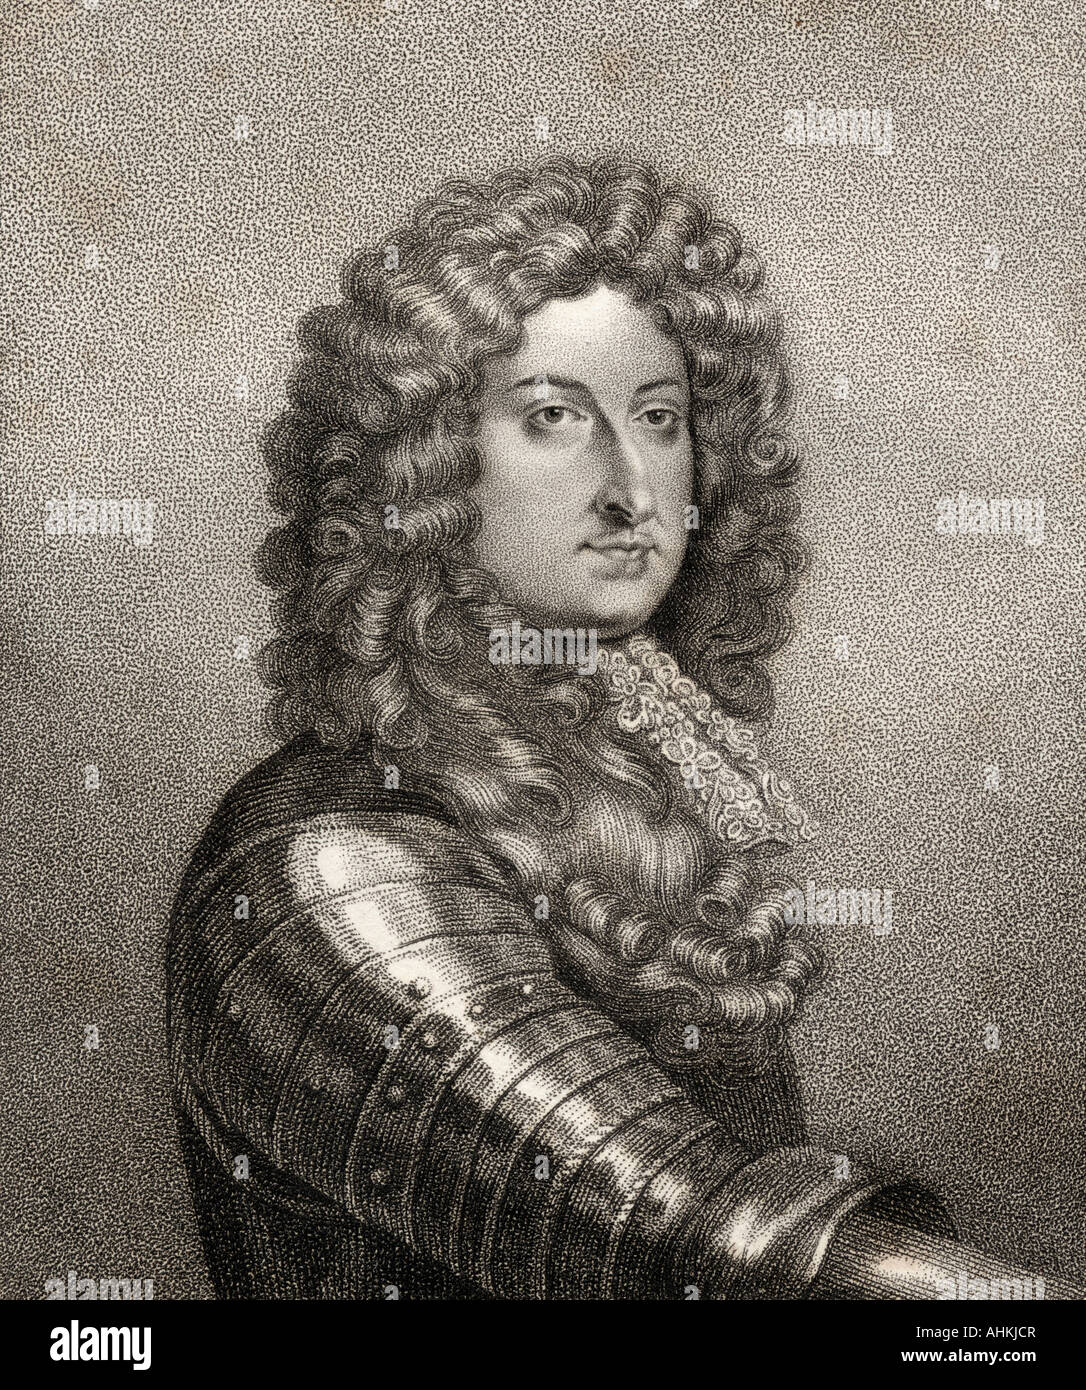 William Cavendish, 1st Duke of Devonshire, 1640 - 1707. English soldier and statesman. Stock Photo